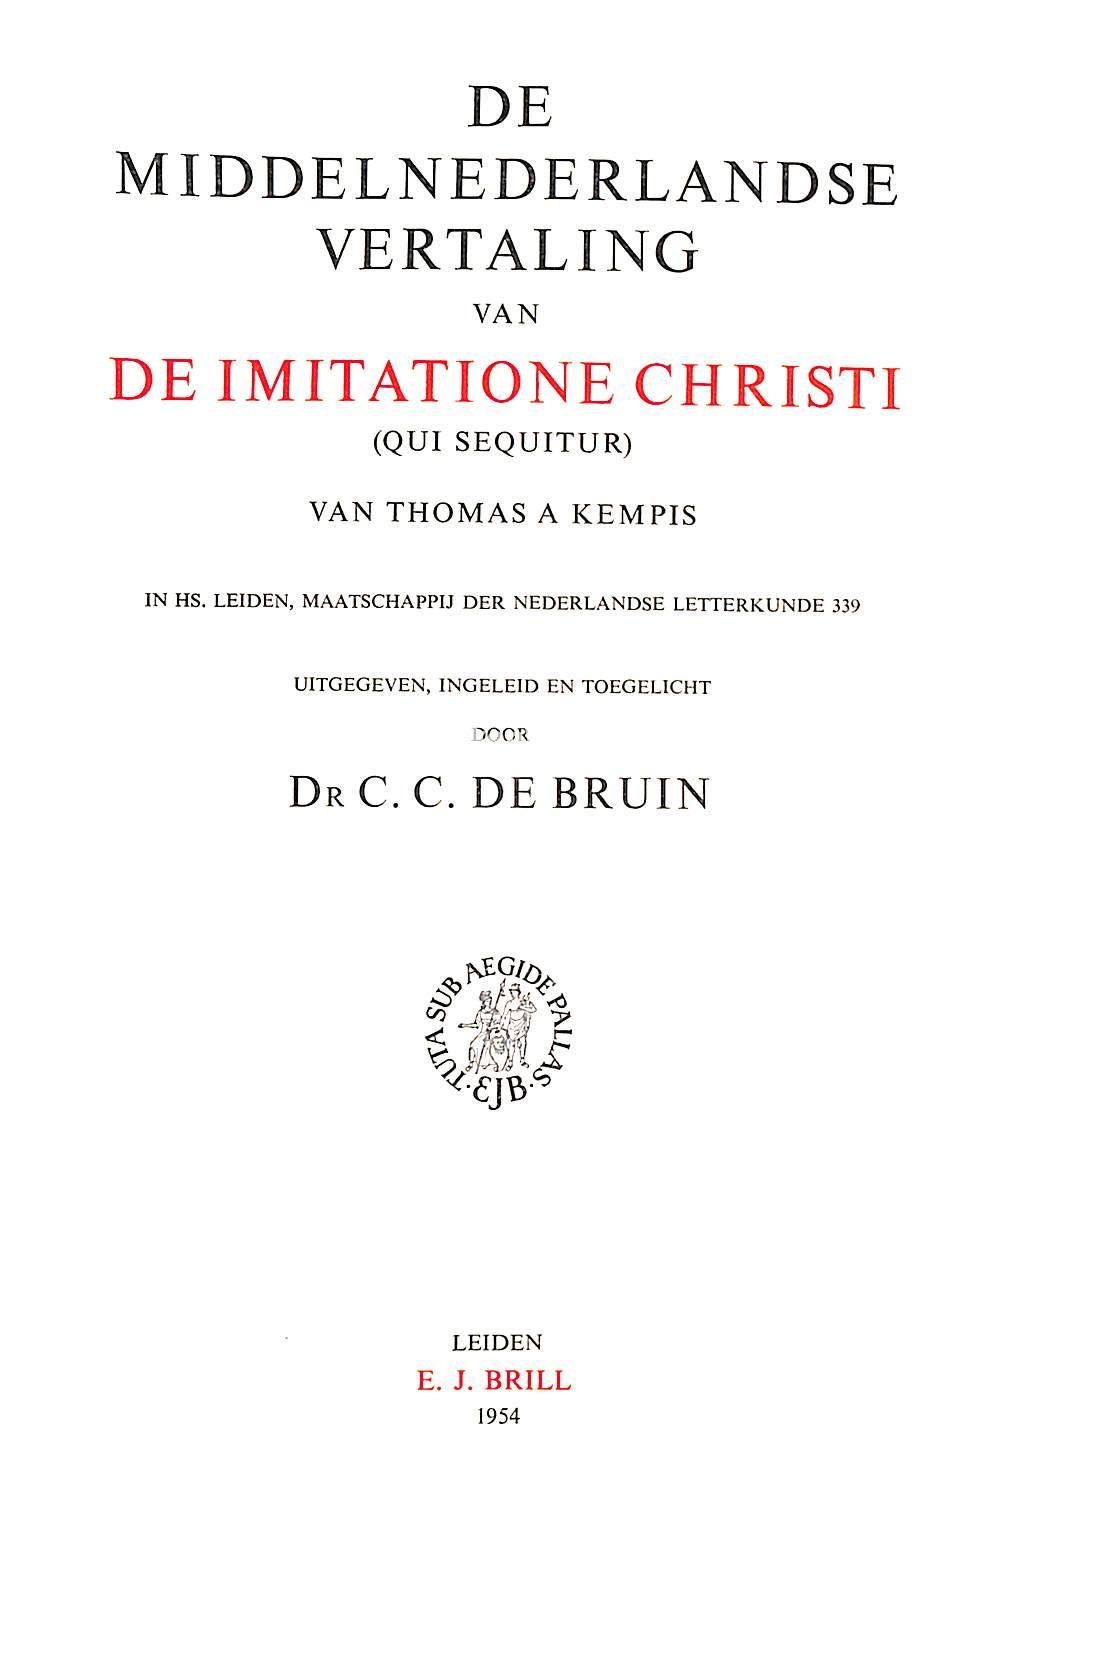 De middelnederlandse vertaling van De imitatione Christi